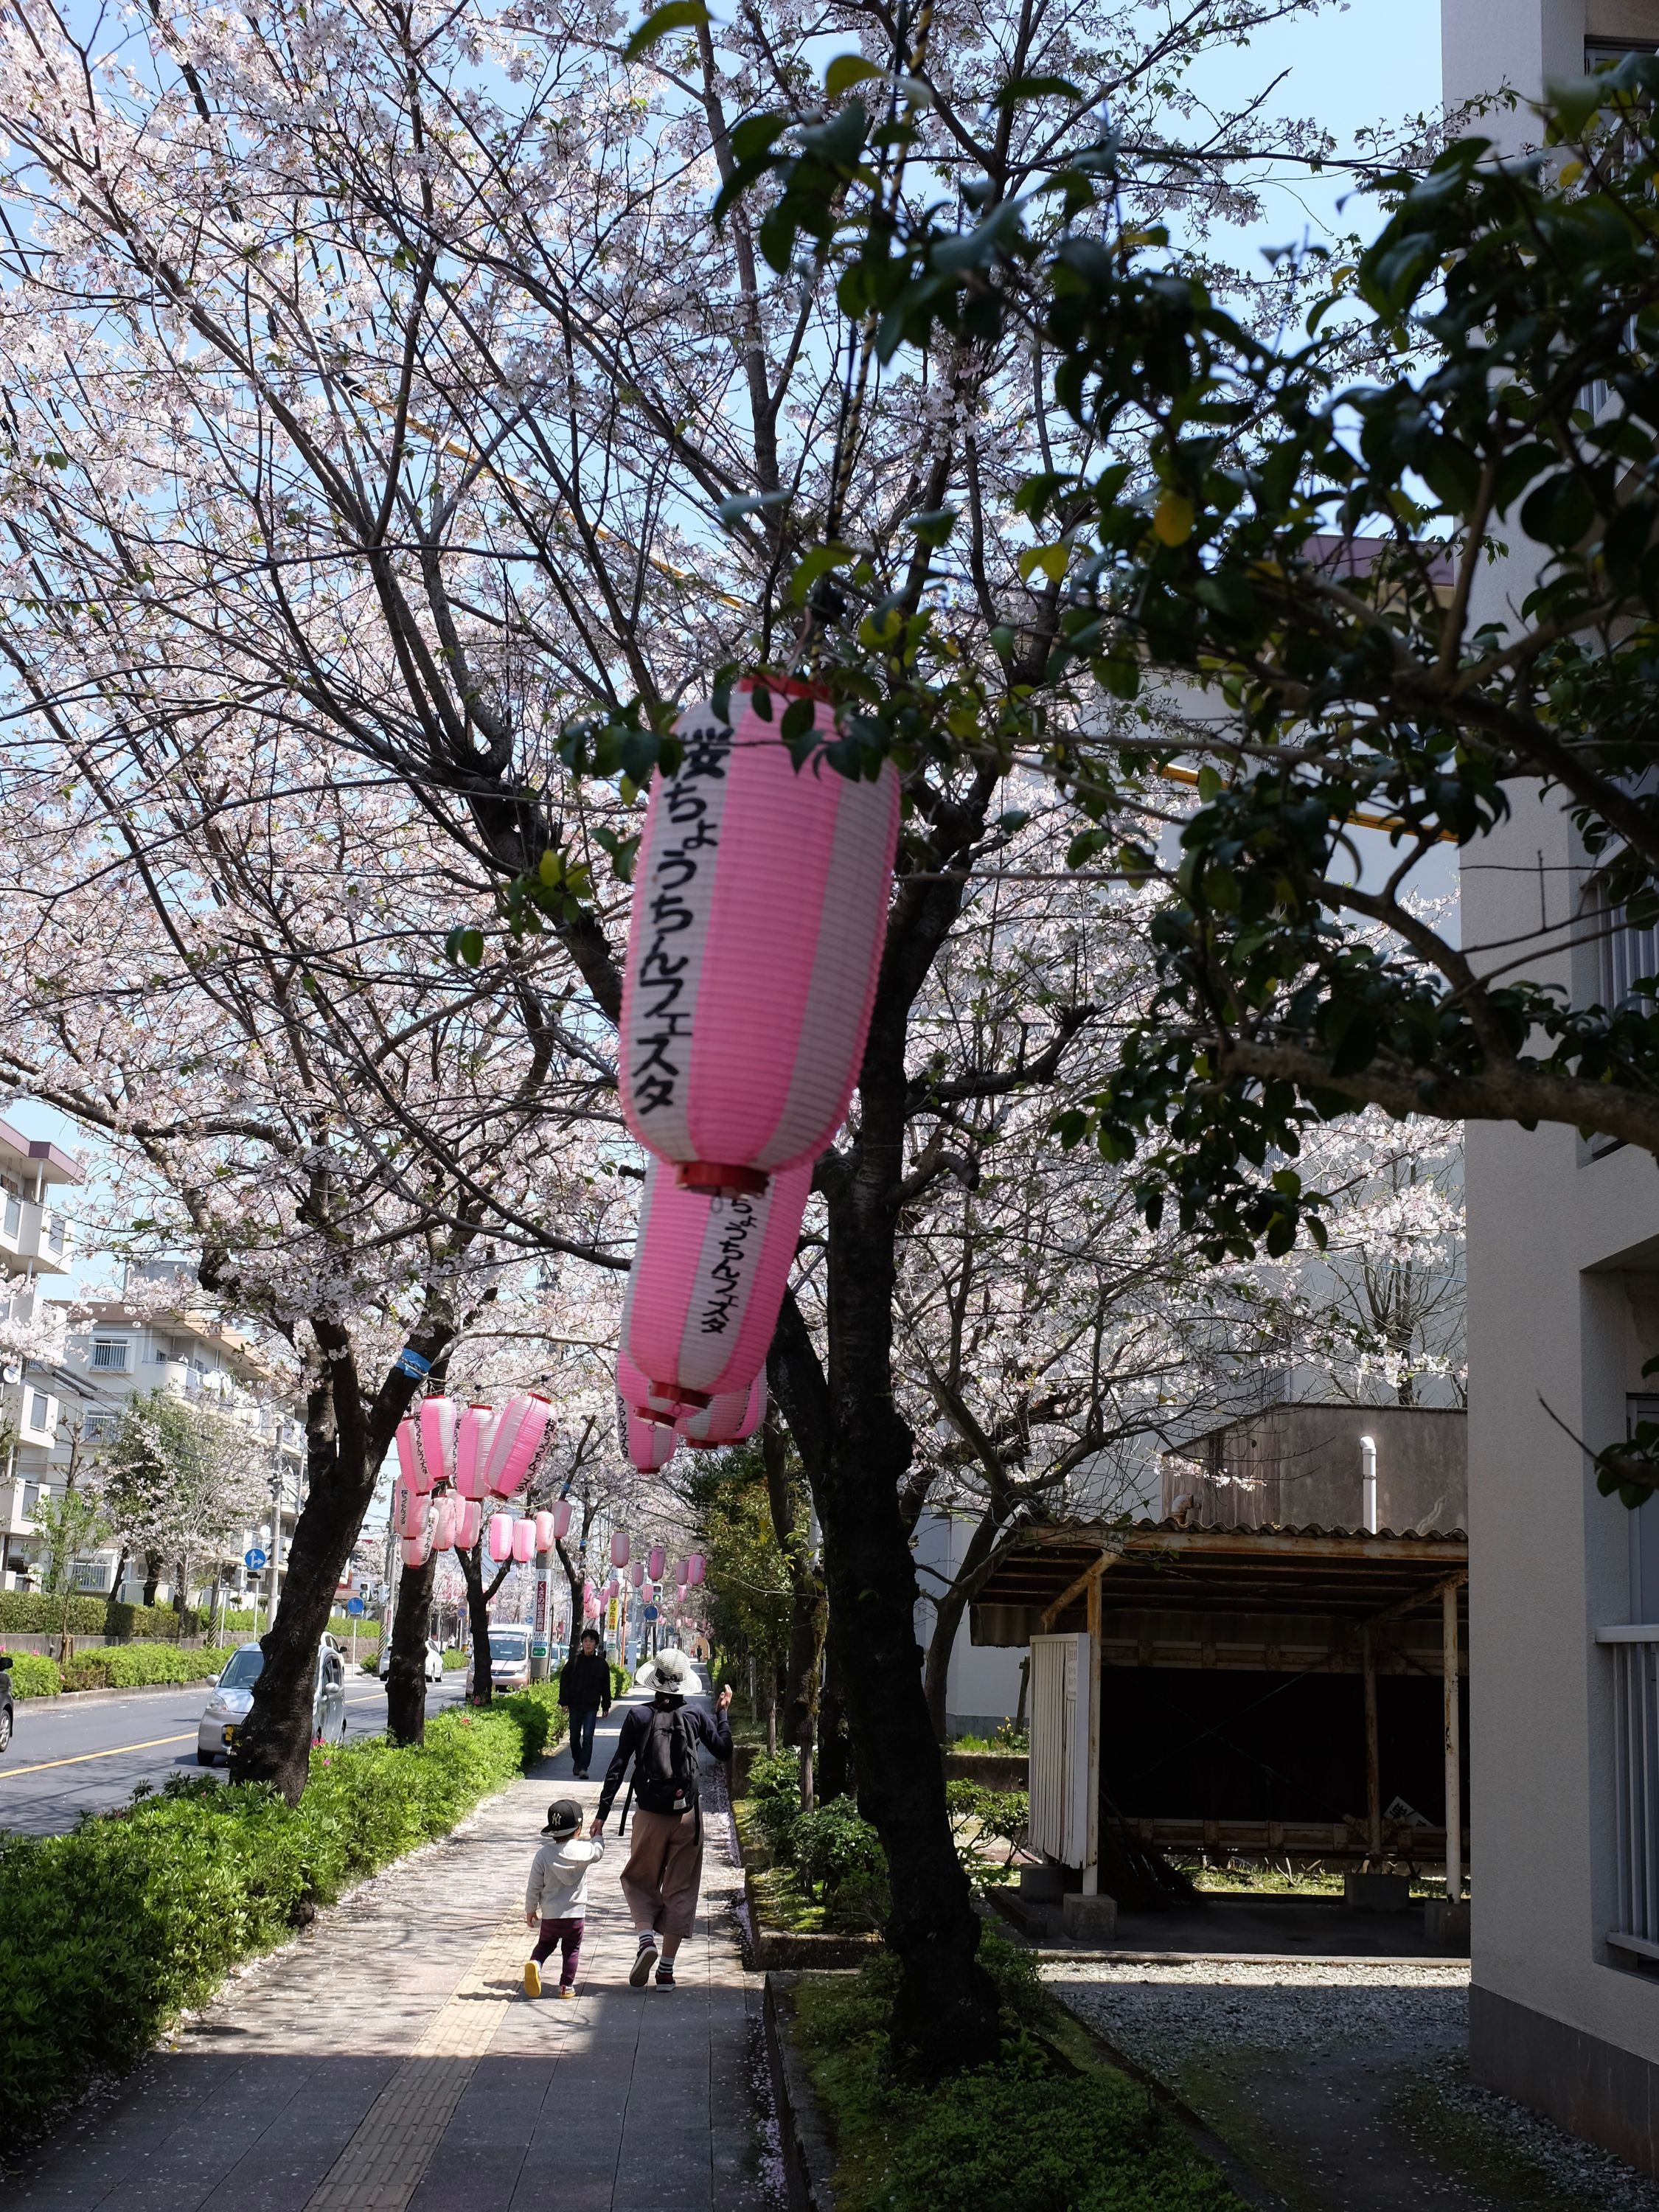 Cherry blossoms on a street in Kagoshima. Photo: Peter Orosz